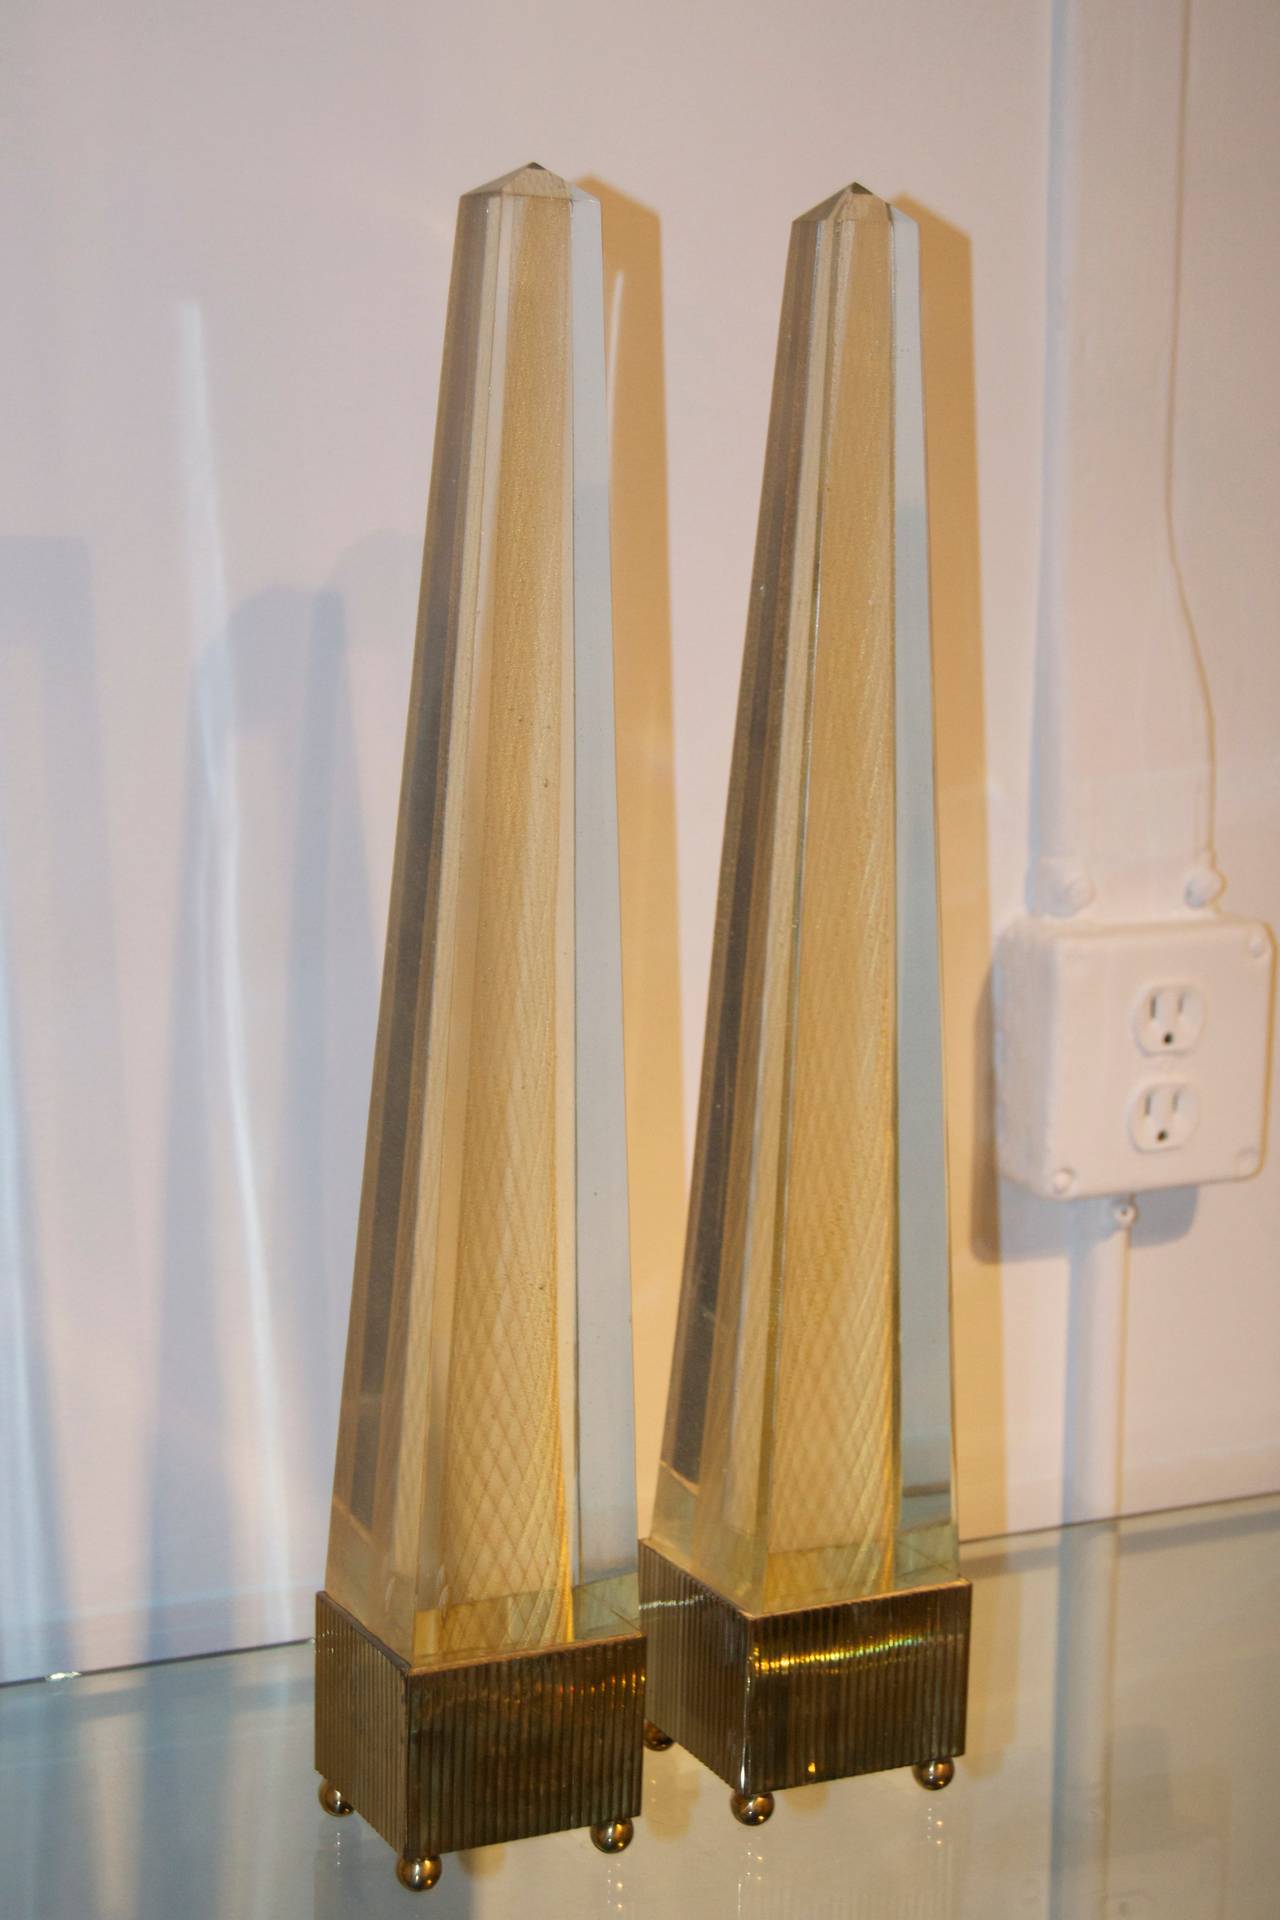 An amazing matched pair of Venini obelisks.